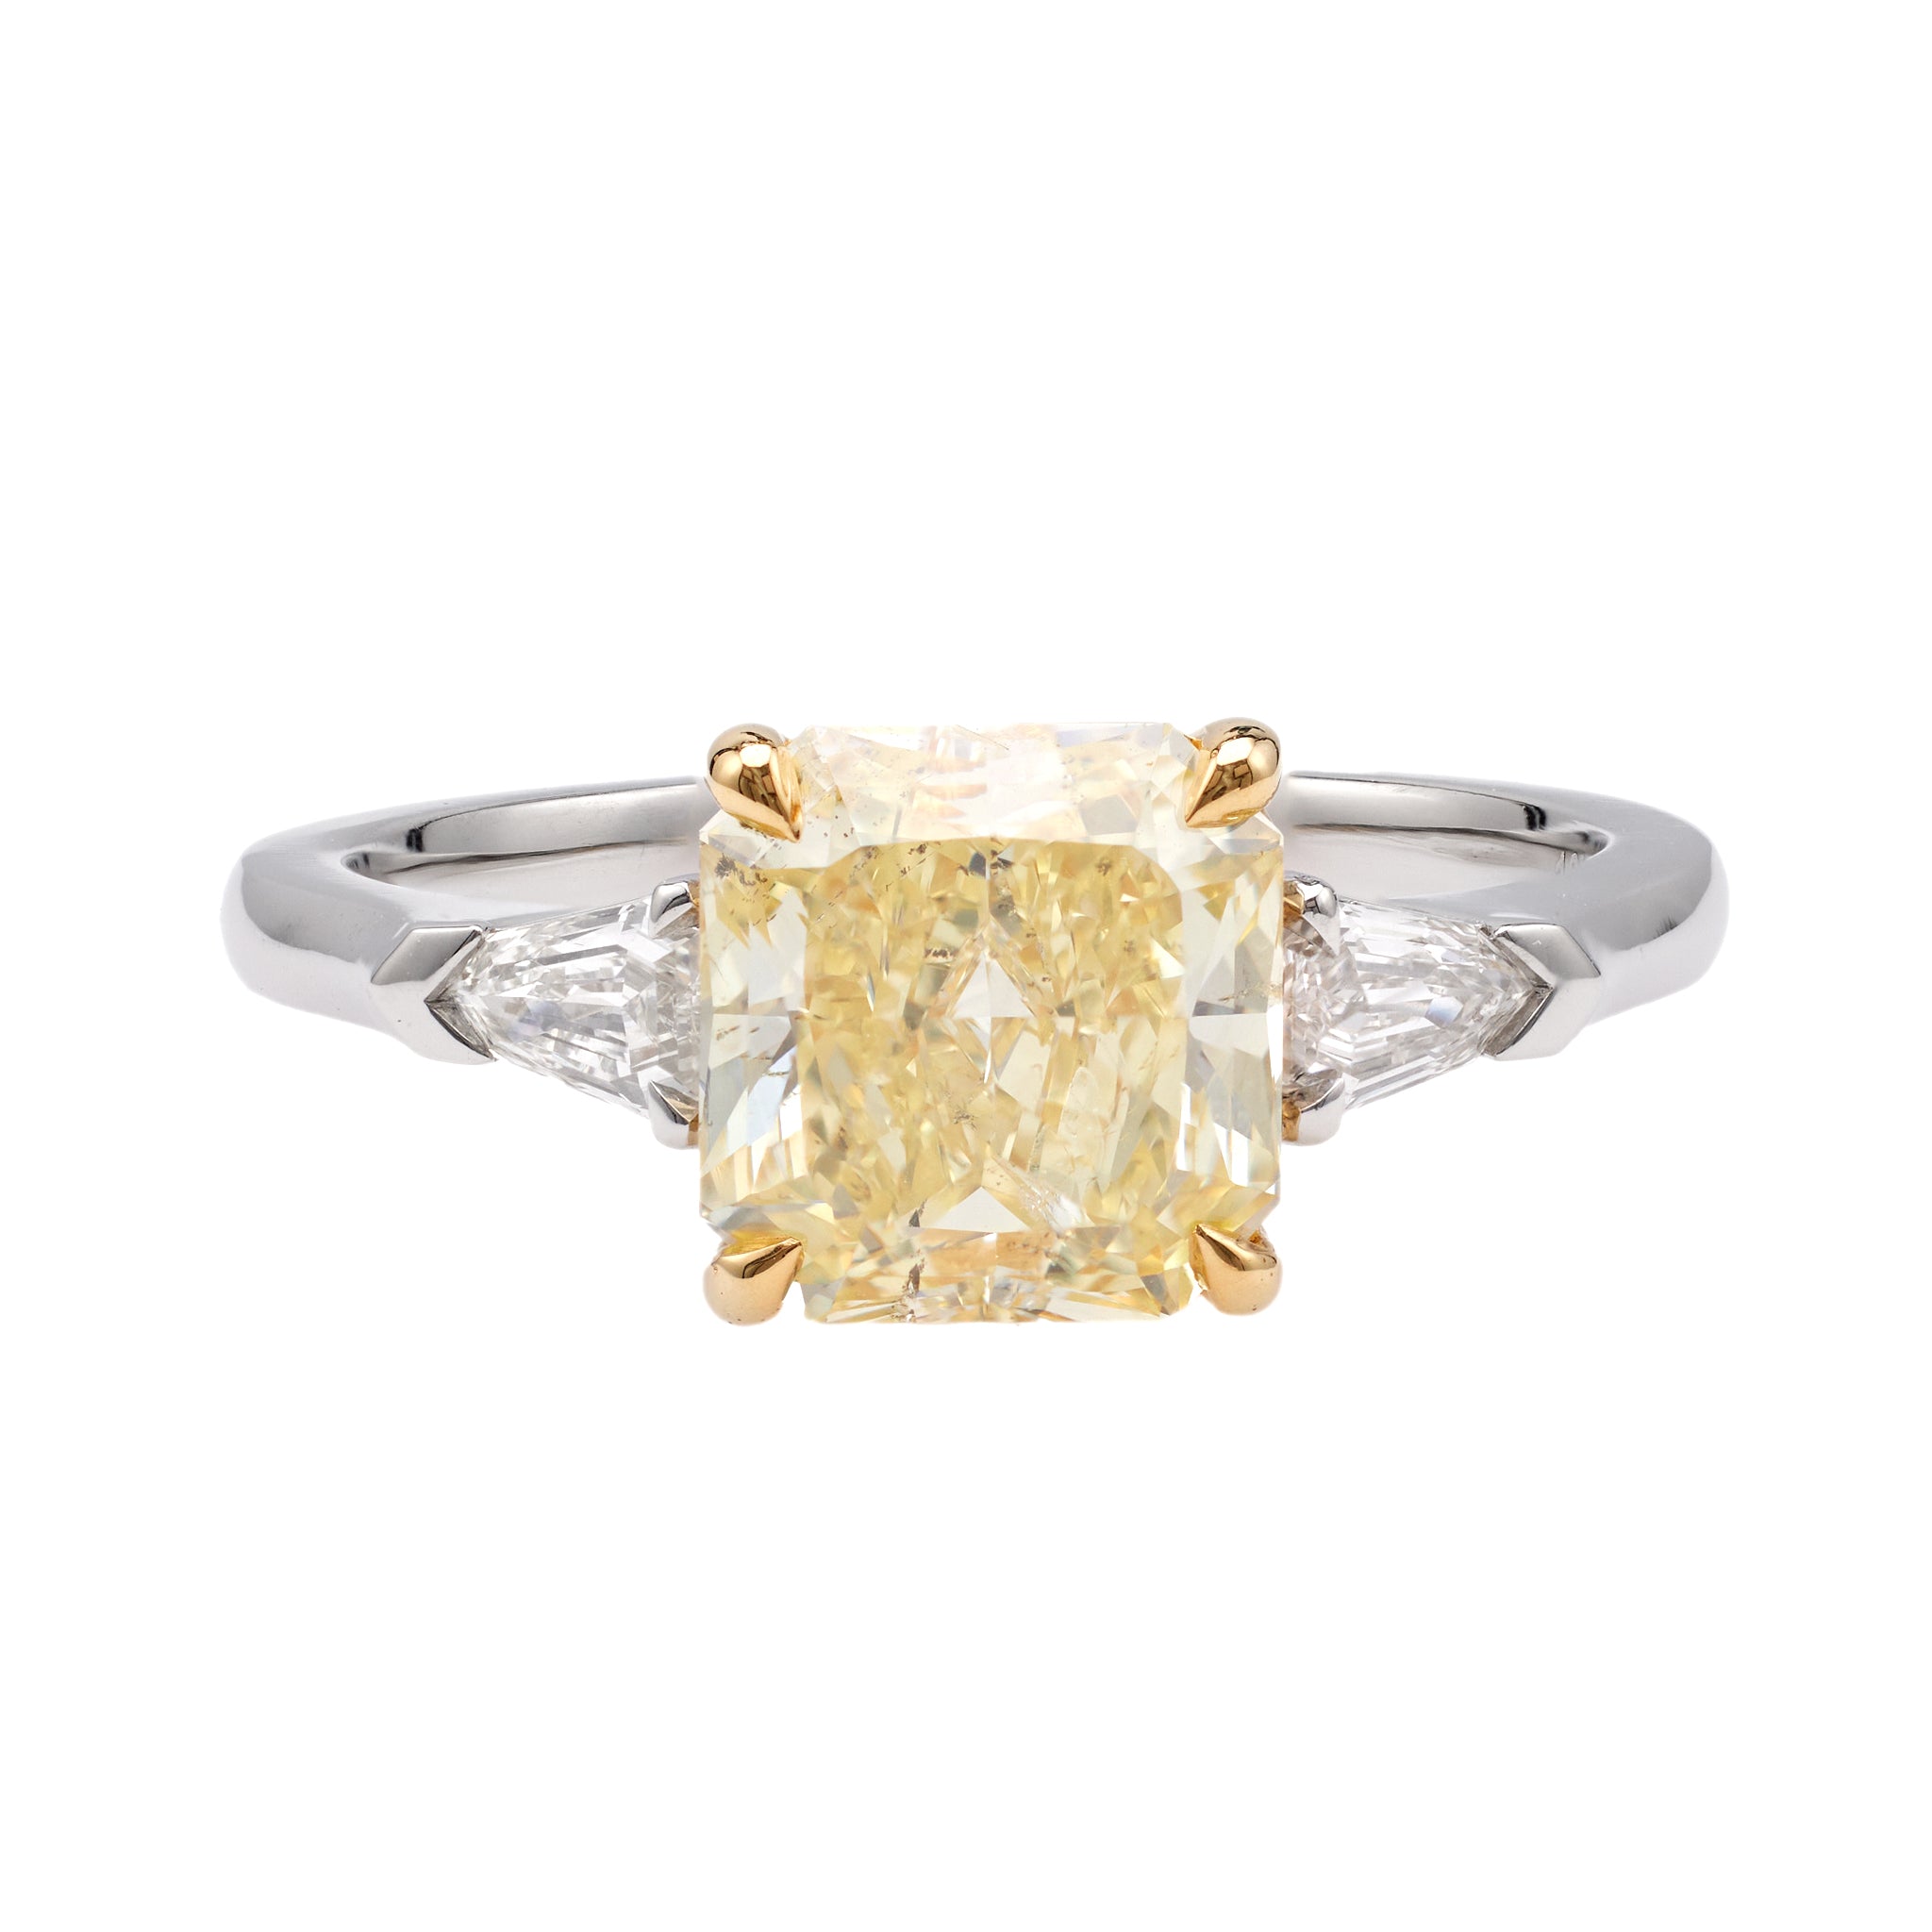 GIA 2.21 Carat Fancy Yellow Radiant Cut Diamond Platinum 18k Gold Ring Rings Jack Weir & Sons   